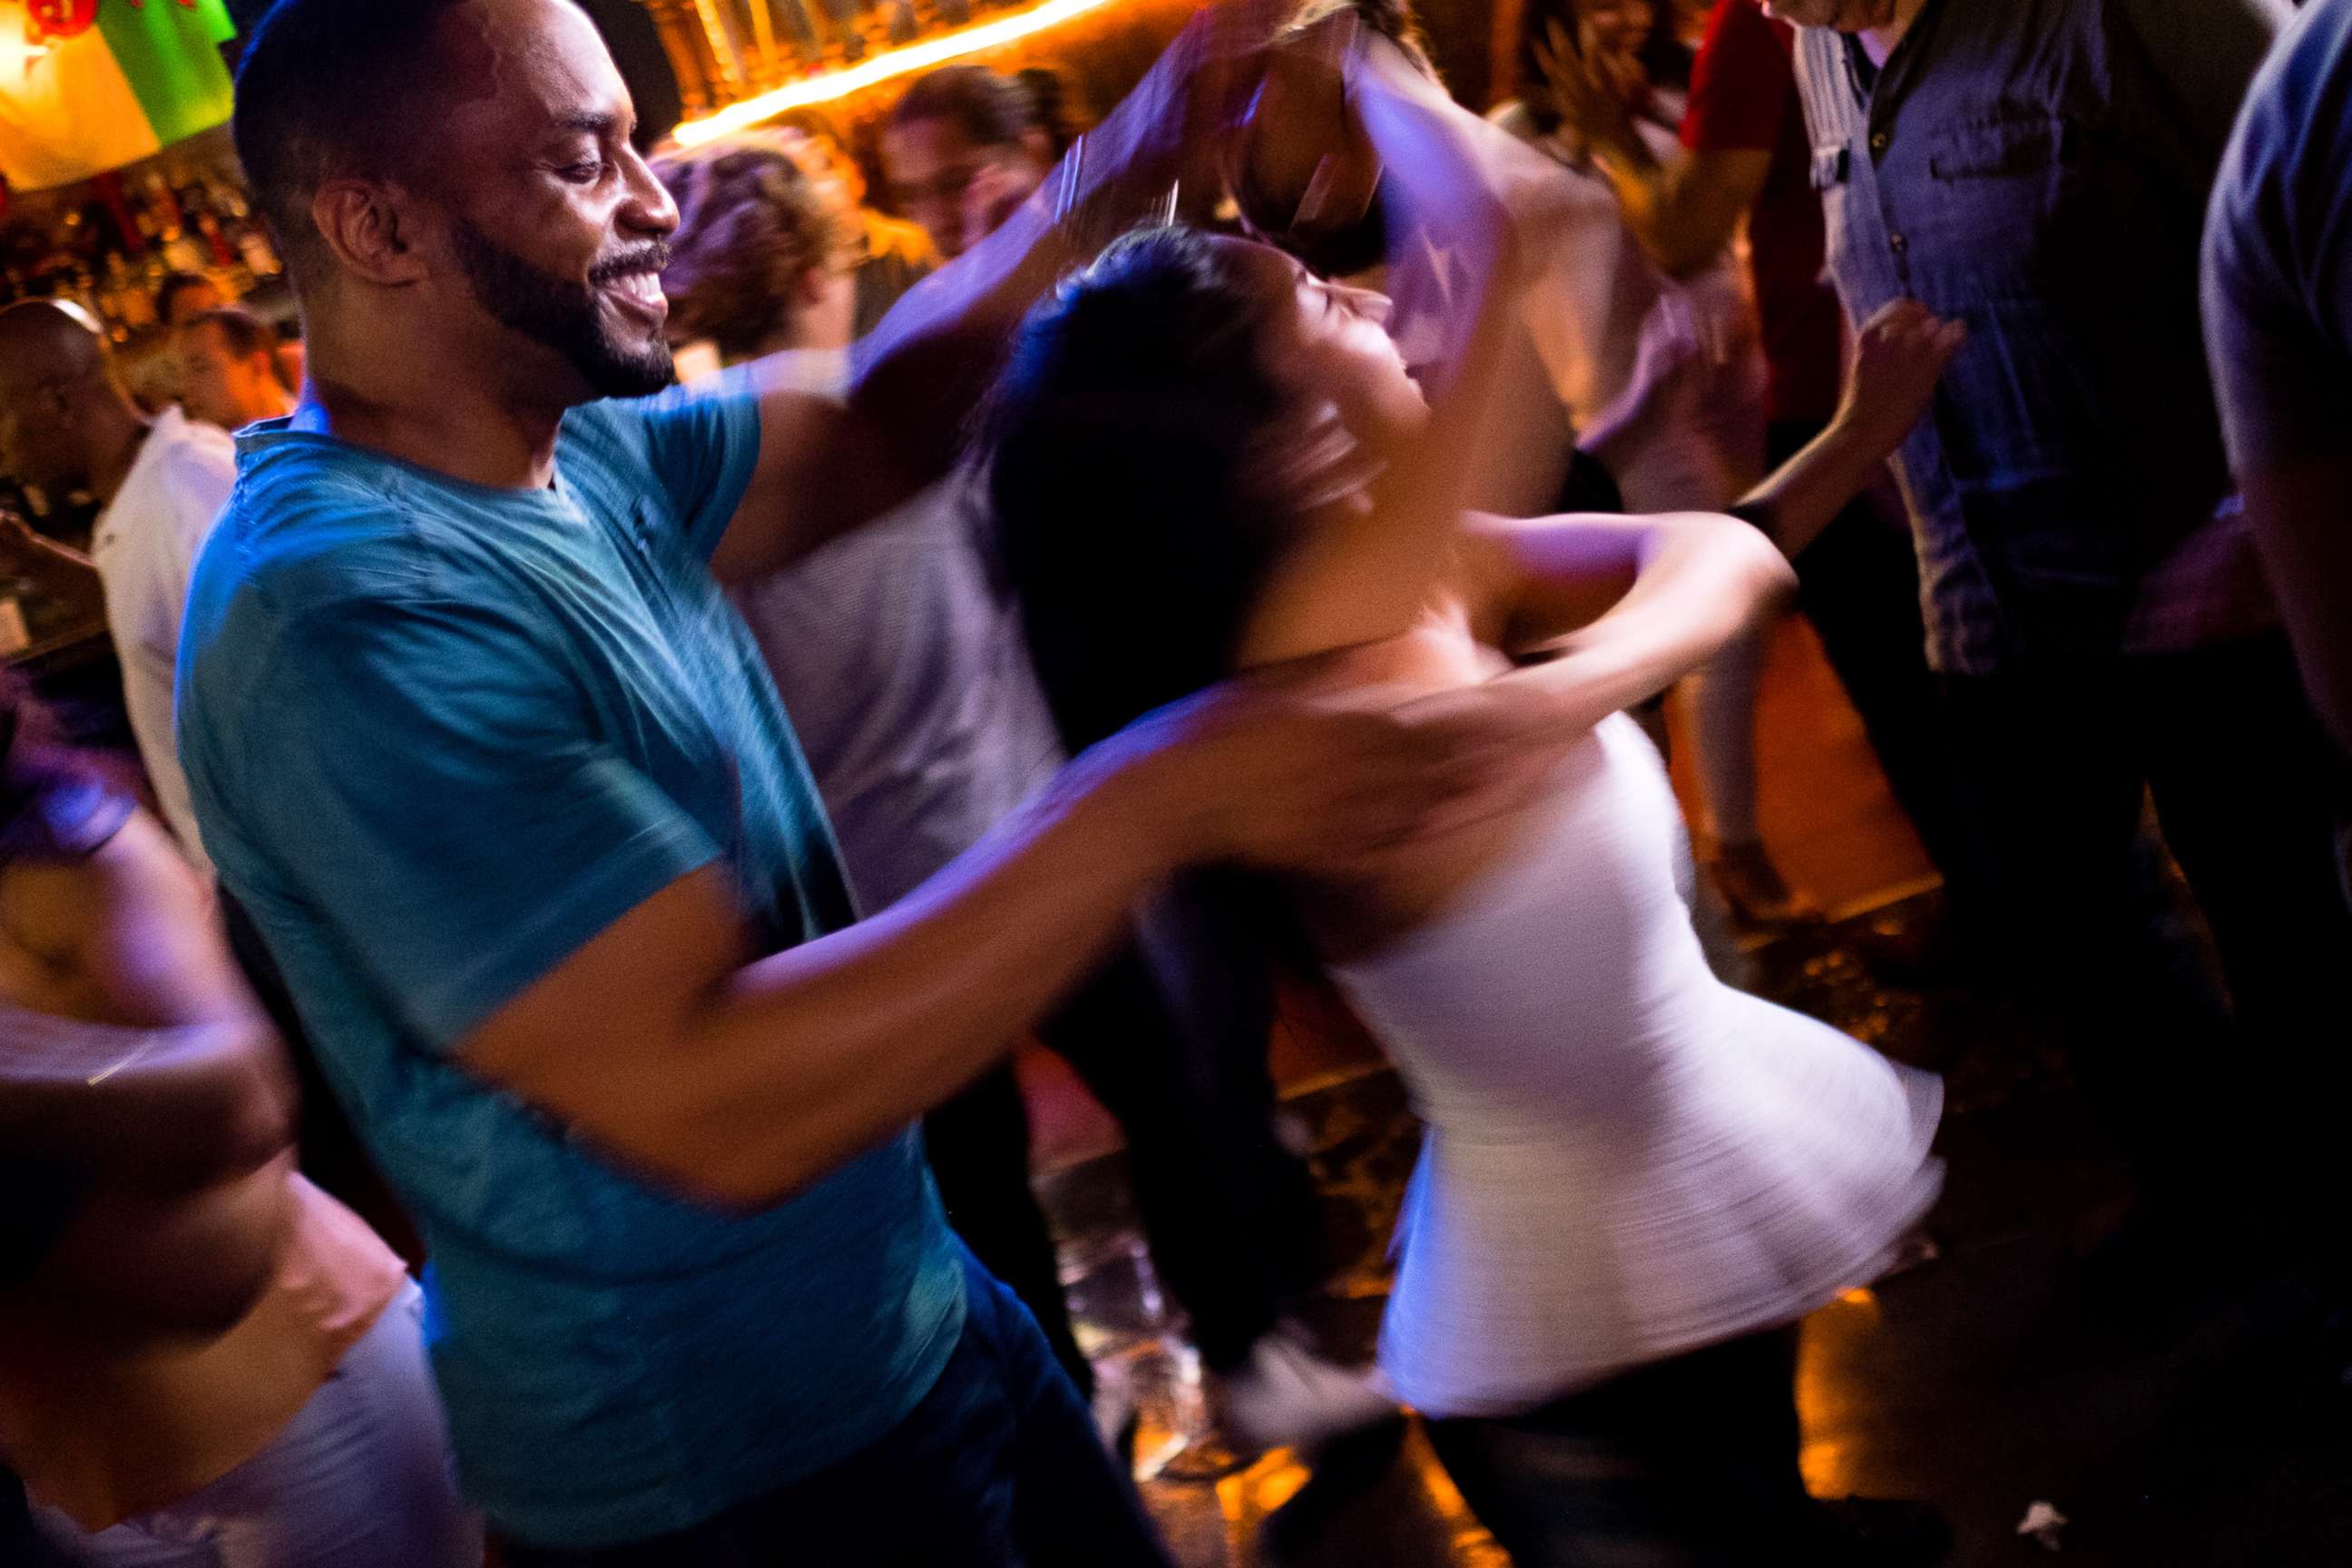 PHOTO: Pierre Bennett spins Joanna Mendez on the dance floor of The Lucky Bar on salsa night at the bar, on Aug. 7, 2017 in Washington, D.C.